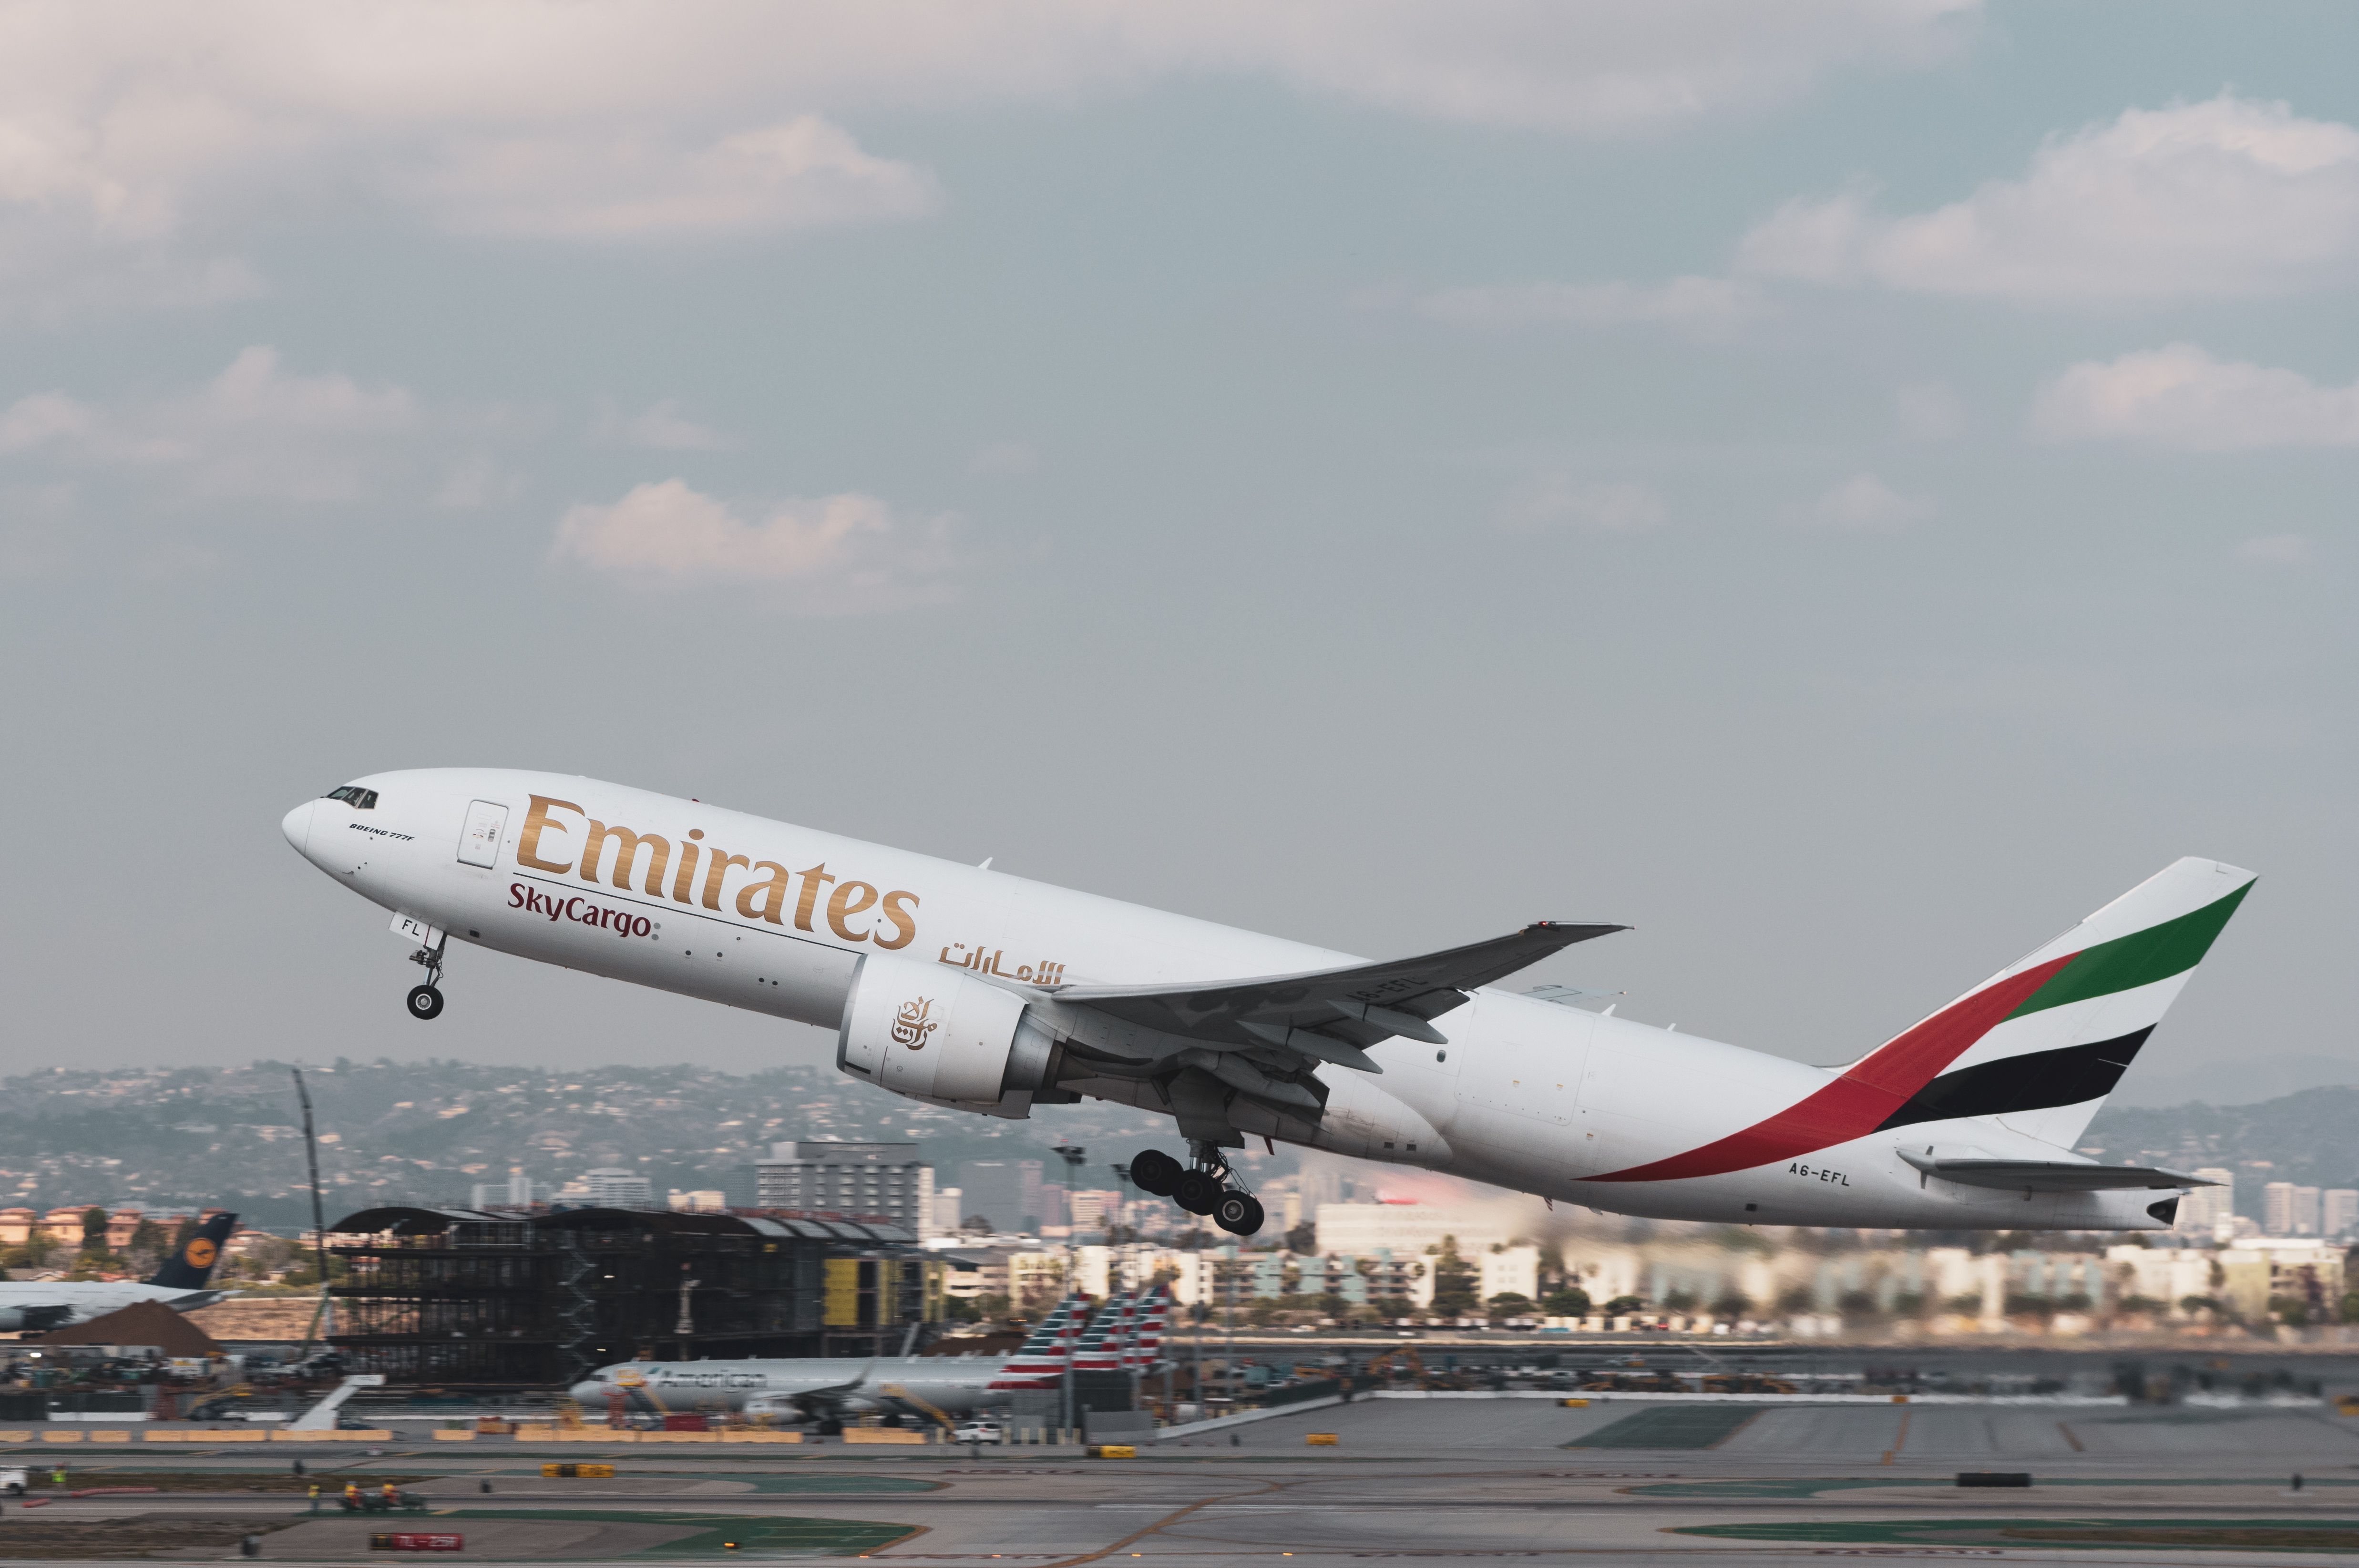 Emirates SkyCargo Boeing 777F taking off